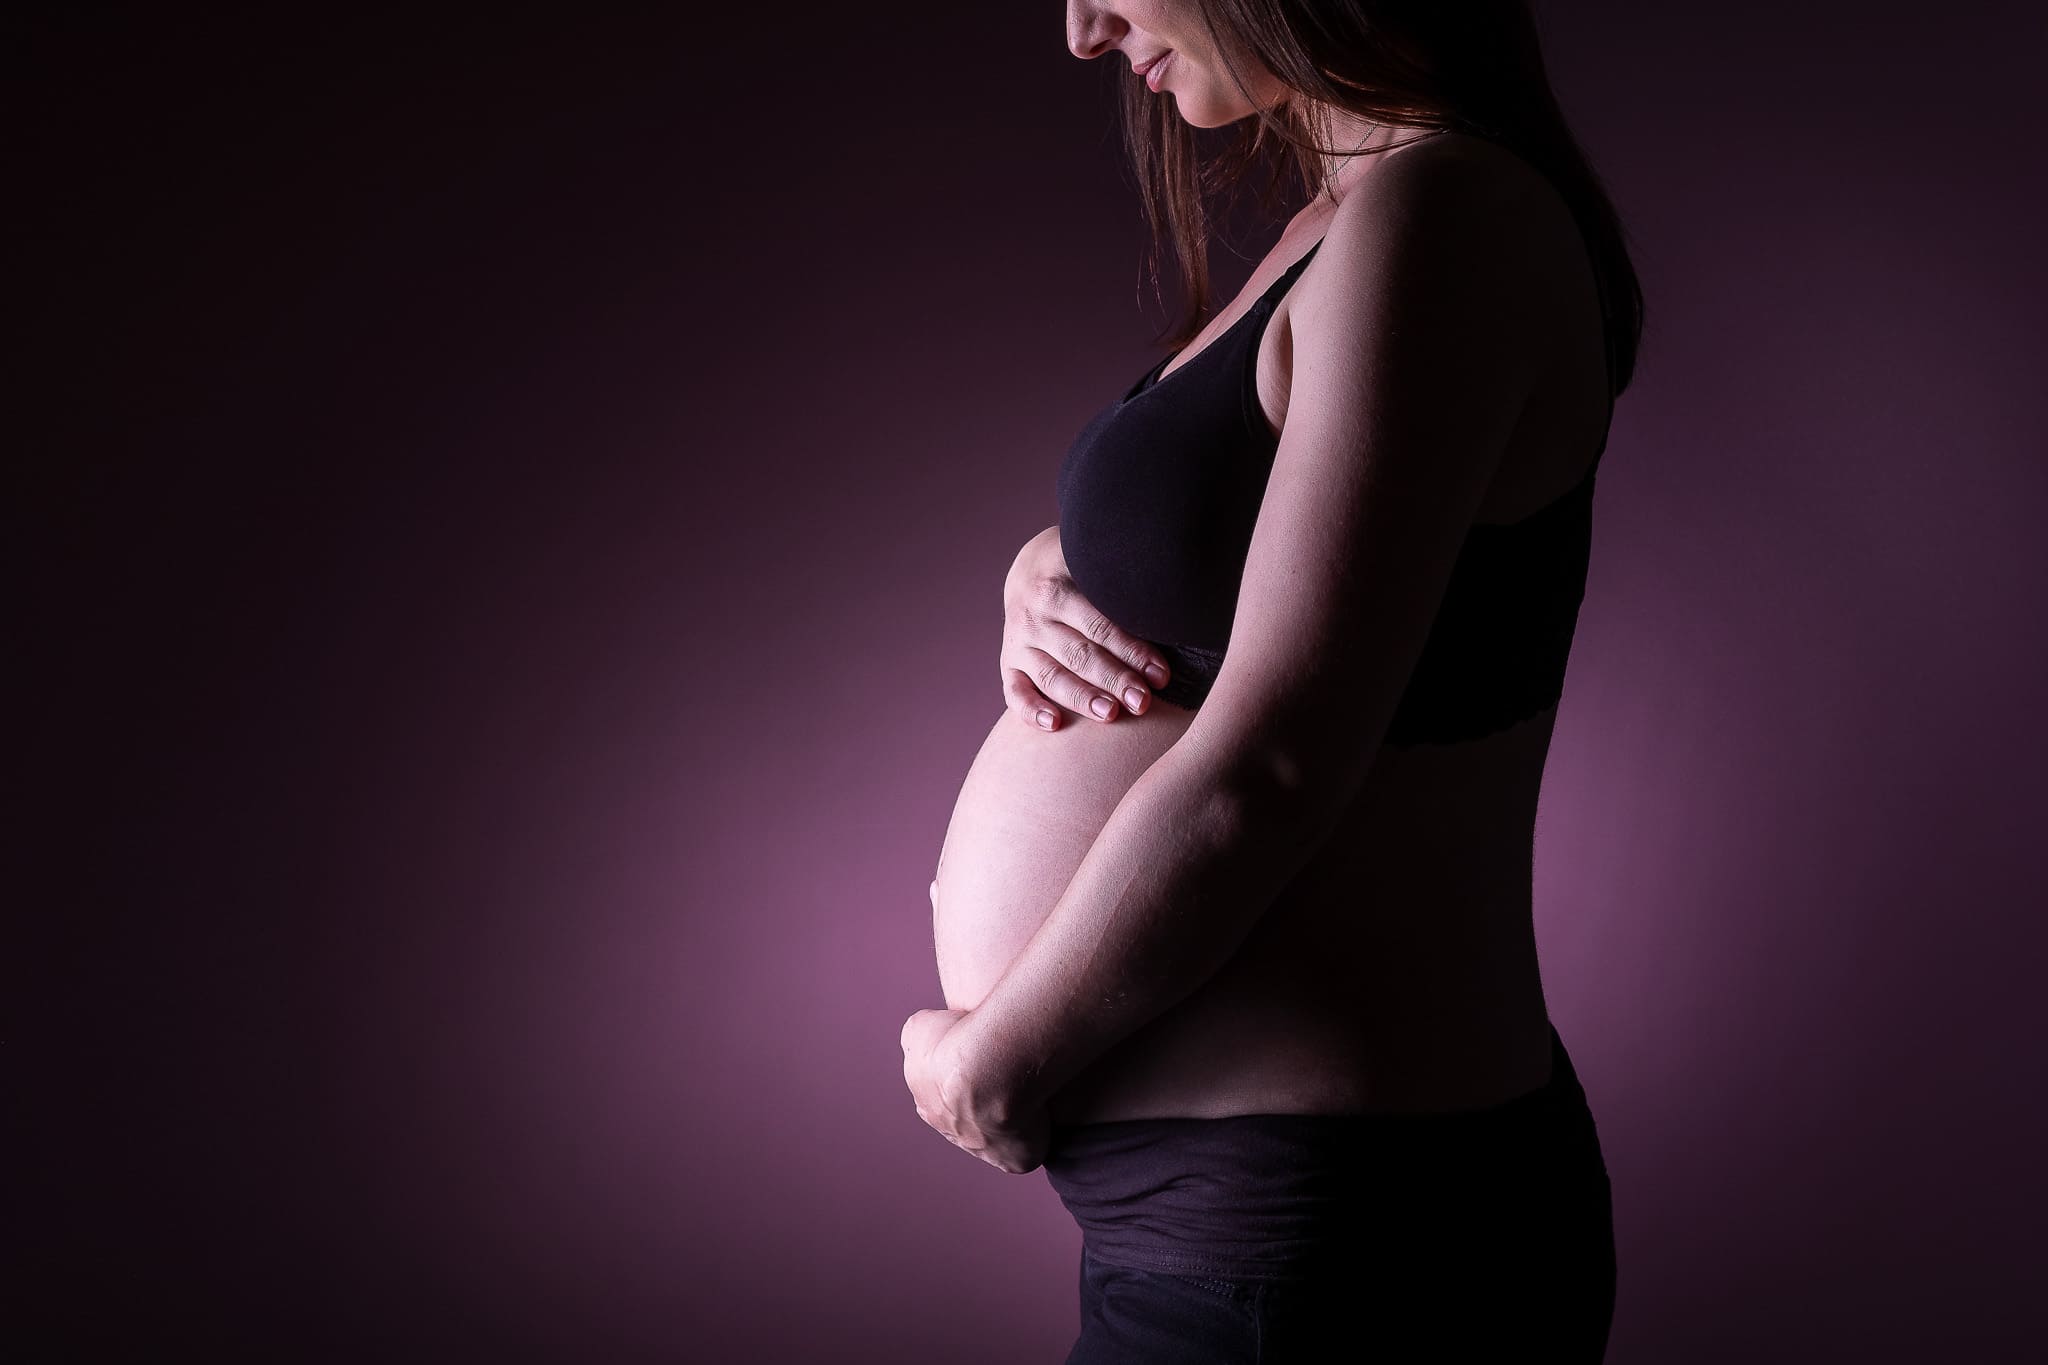 Photographe grossesse geneve - femme enceinte sur fond violet.